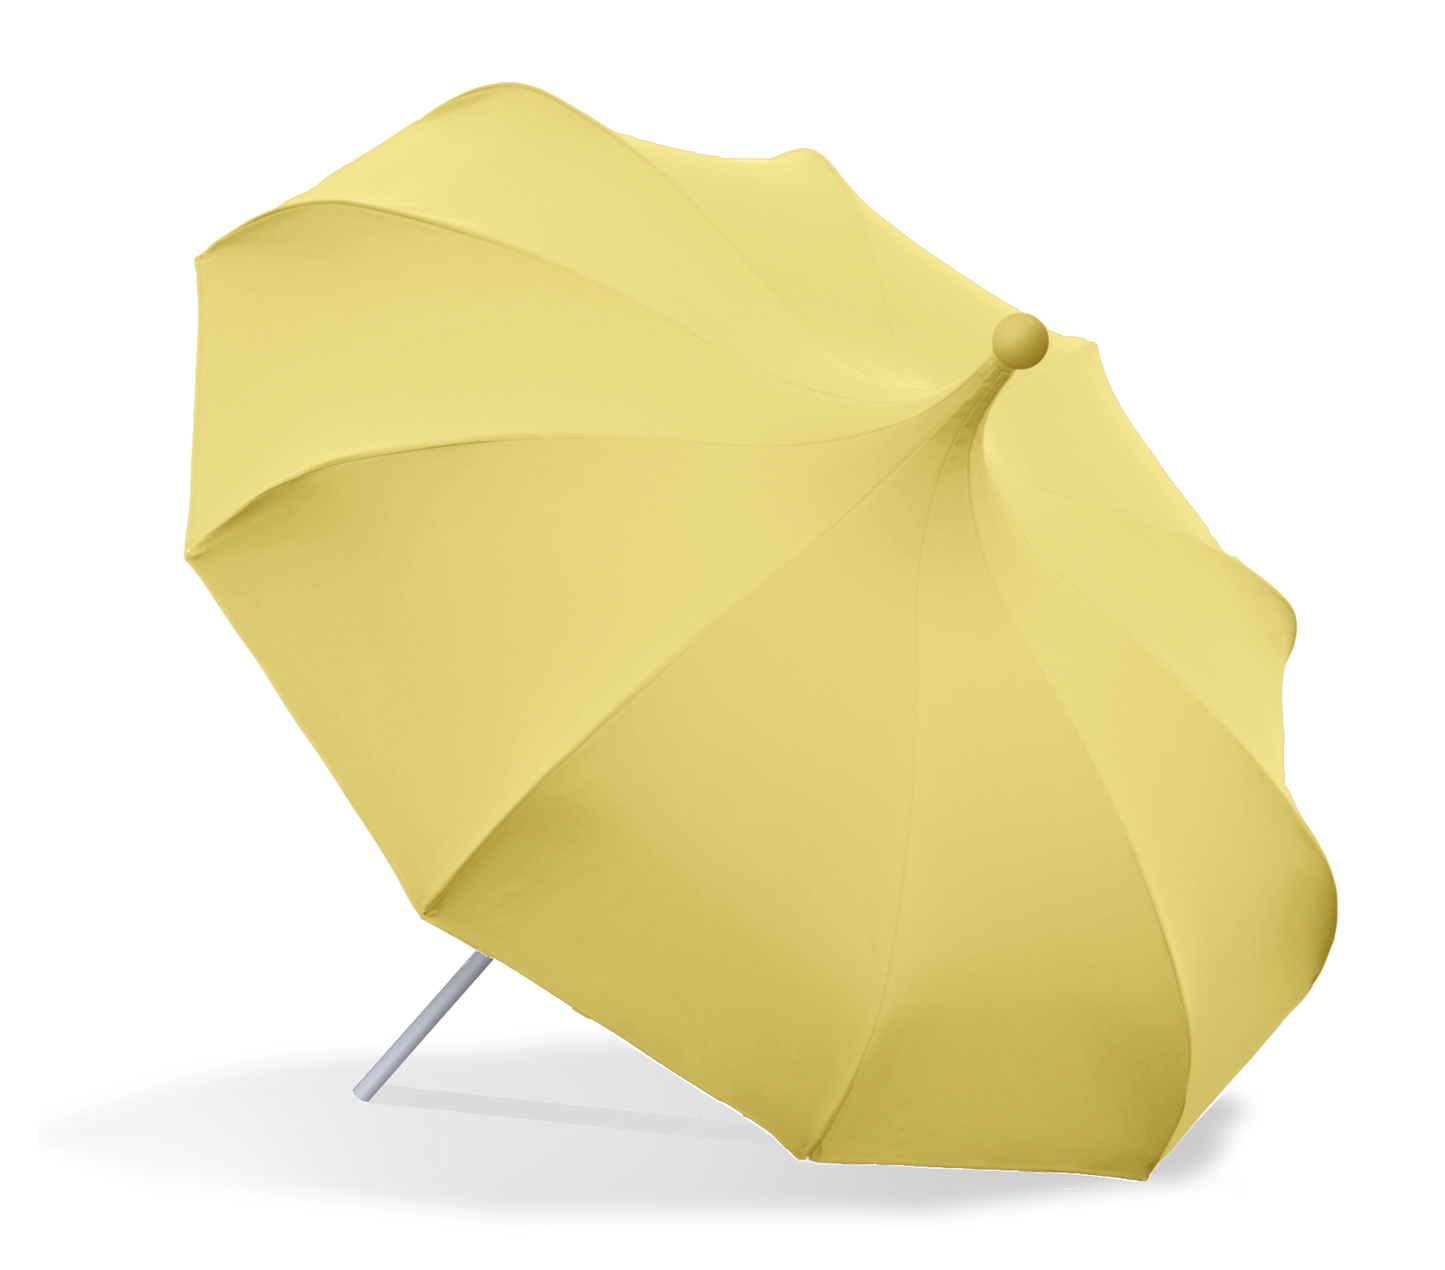 Light yellow parasol